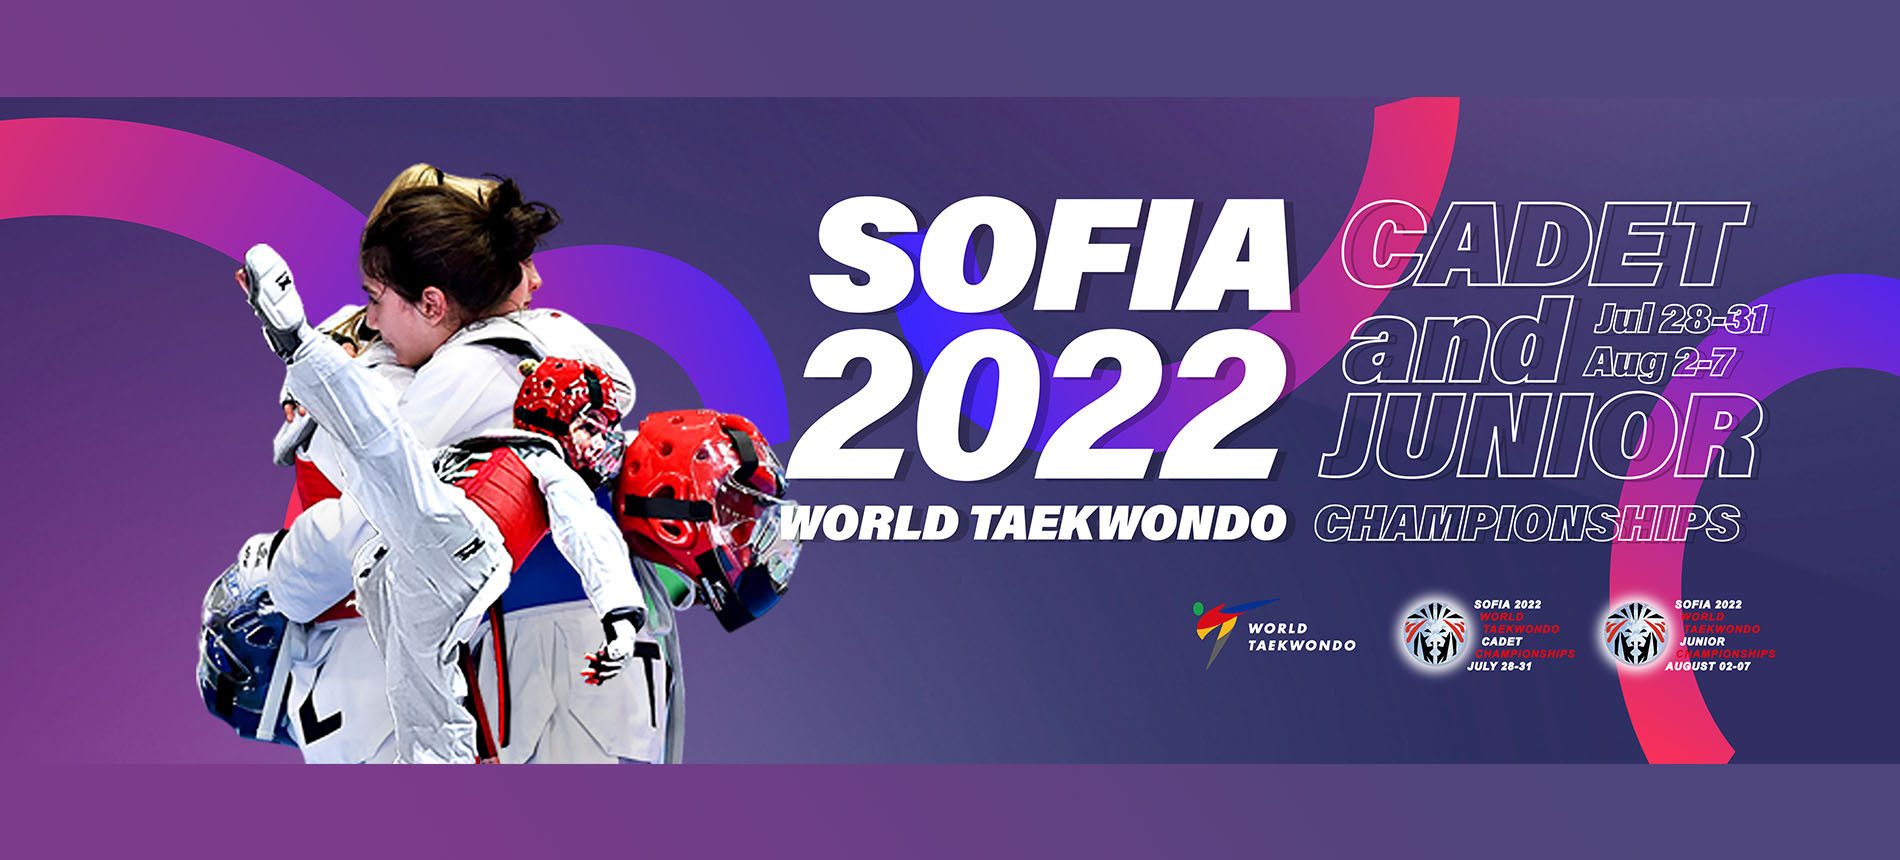 Sofia is preparing to host the World Taekwondo Cadet and Junior World Championships ©WT